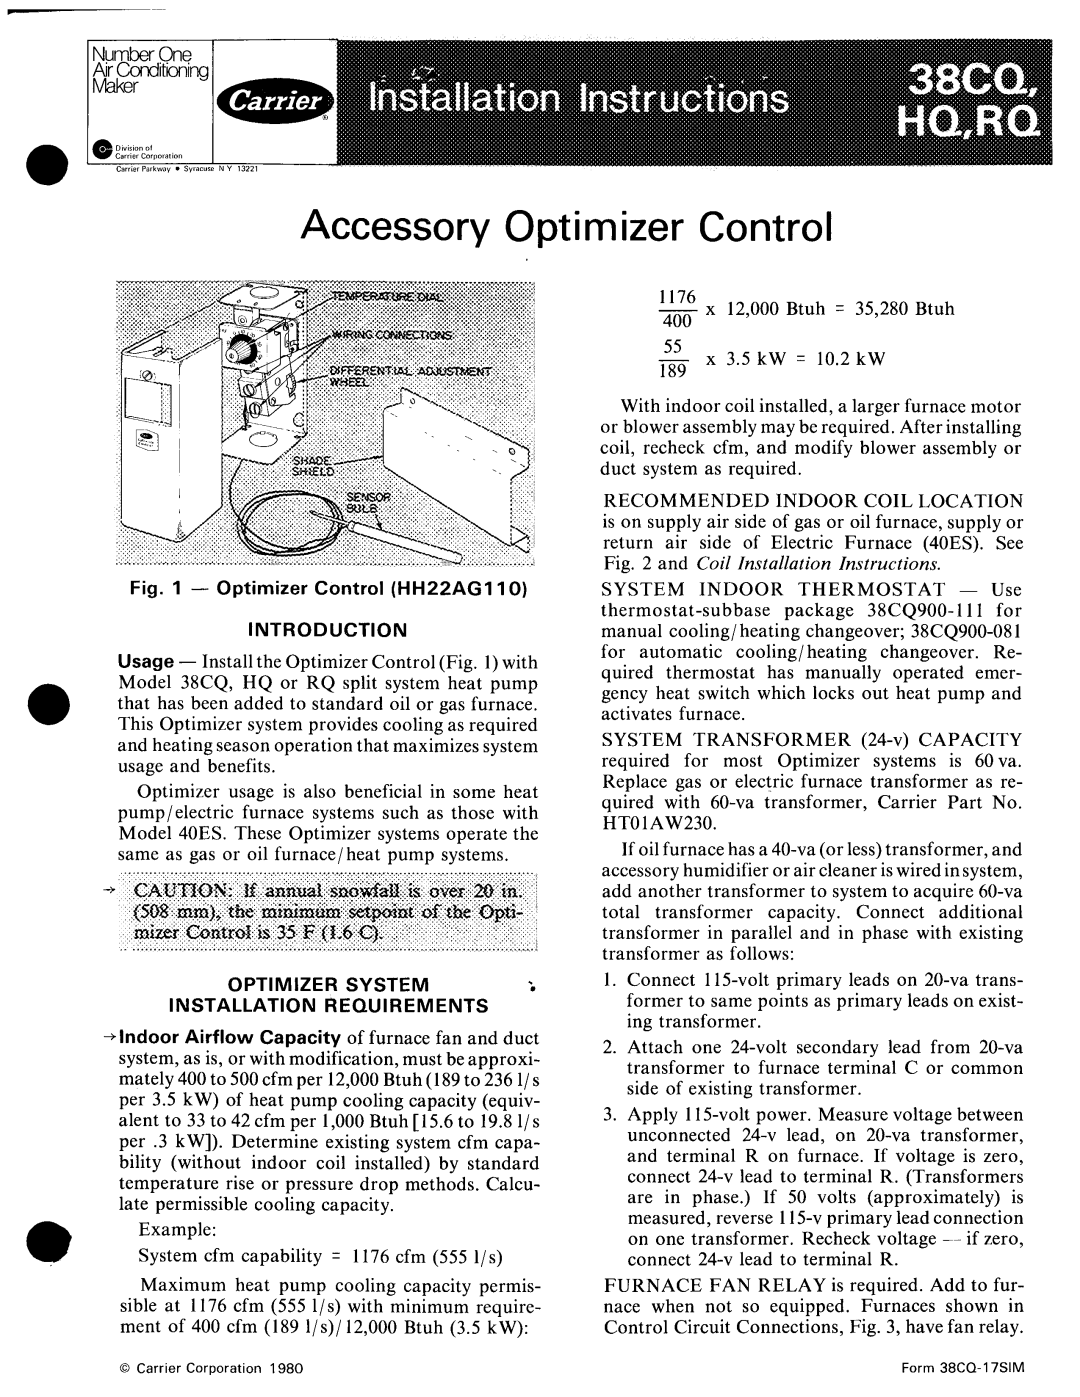 Carrier 38CQ manual 